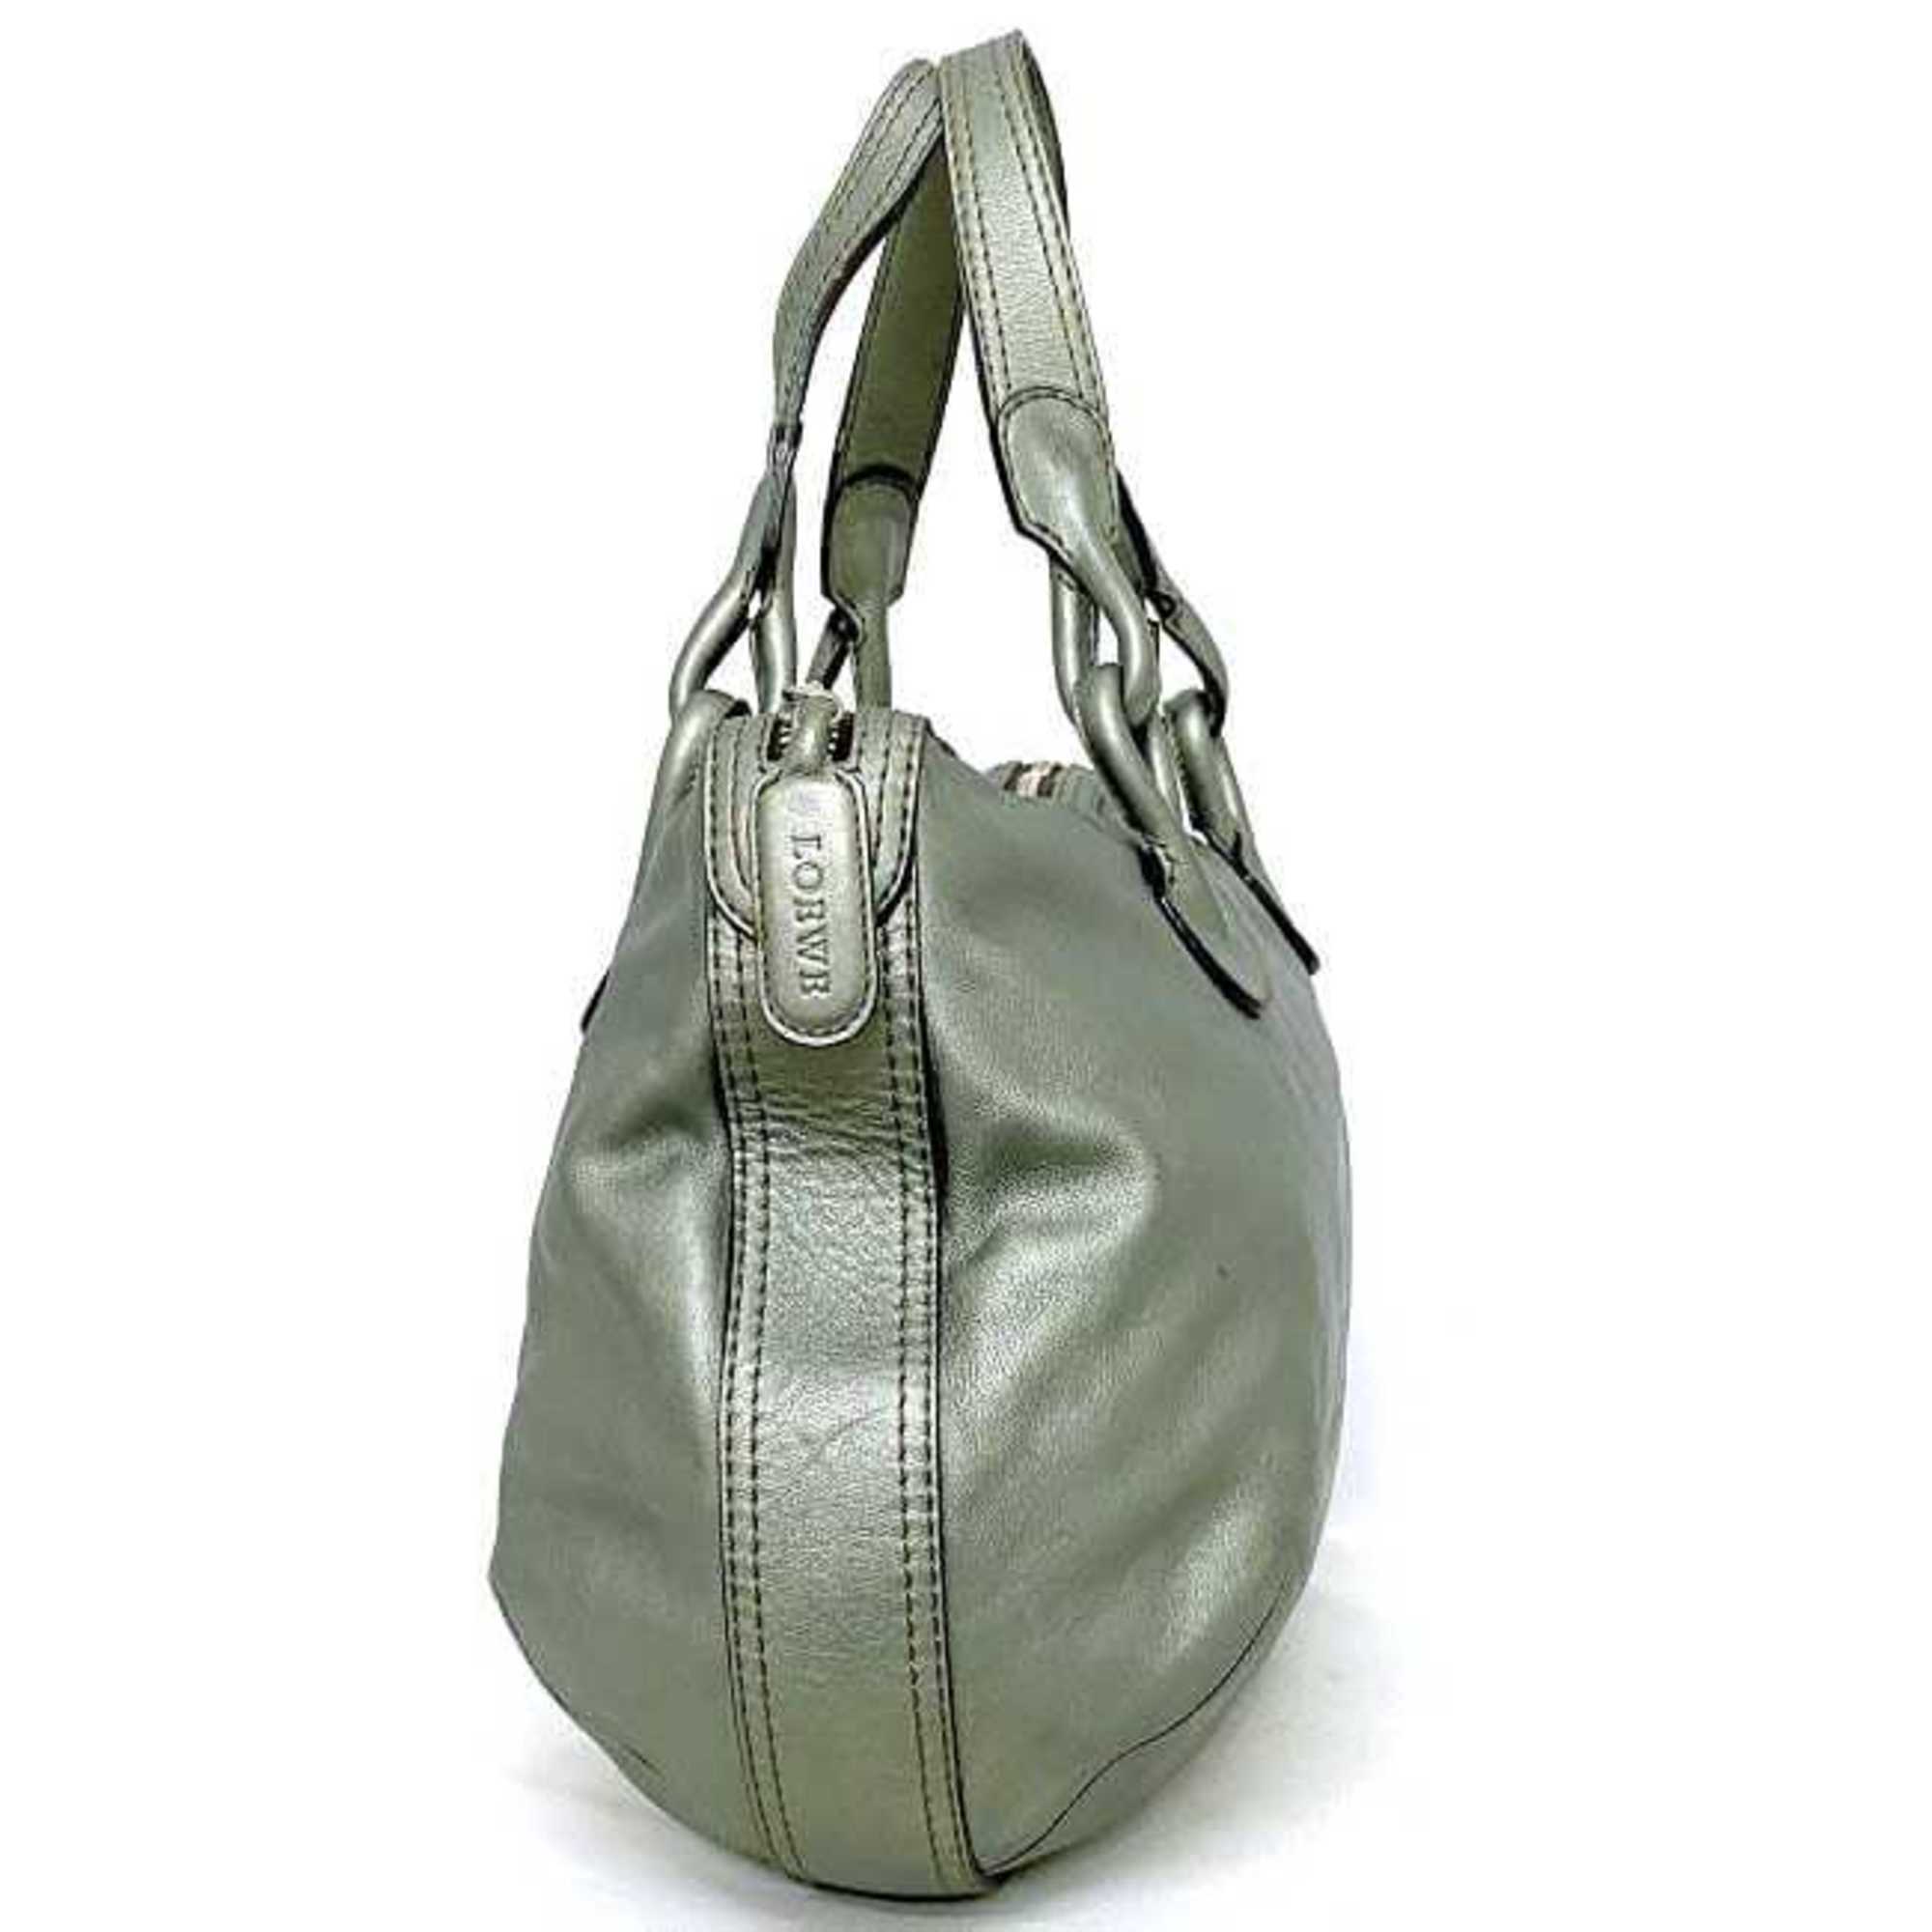 LOEWE 2way bag metallic green Fiesta 290805 leather handbag ladies